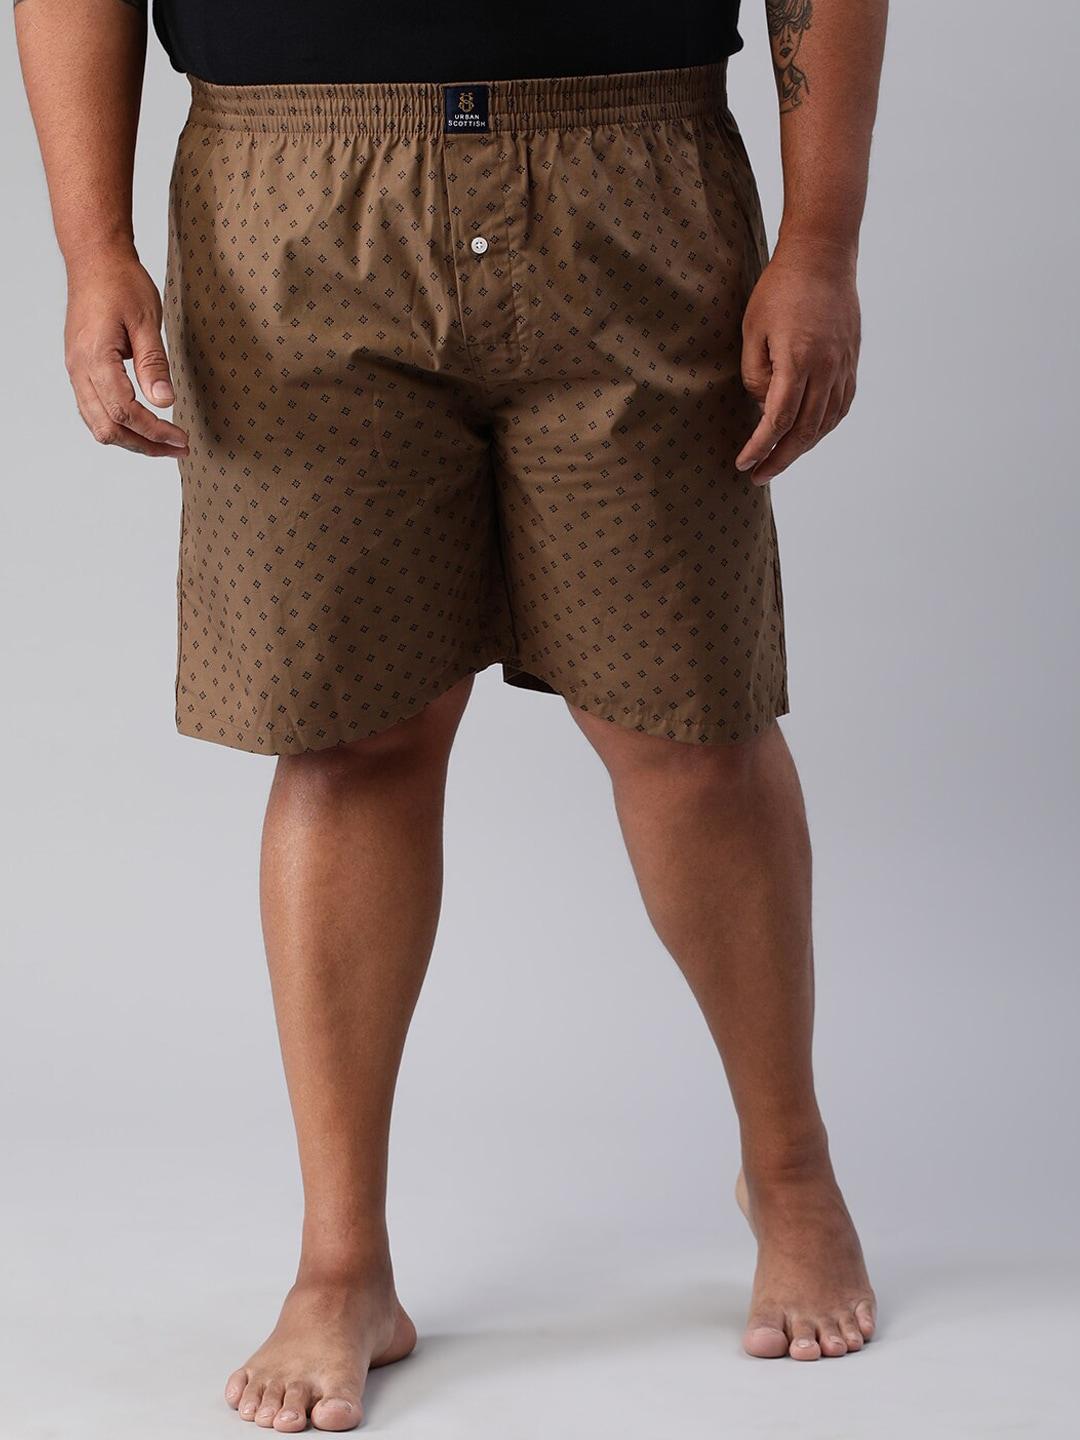 URBAN SCOTTISH Men Plus Size Printed Pure Cotton Boxers